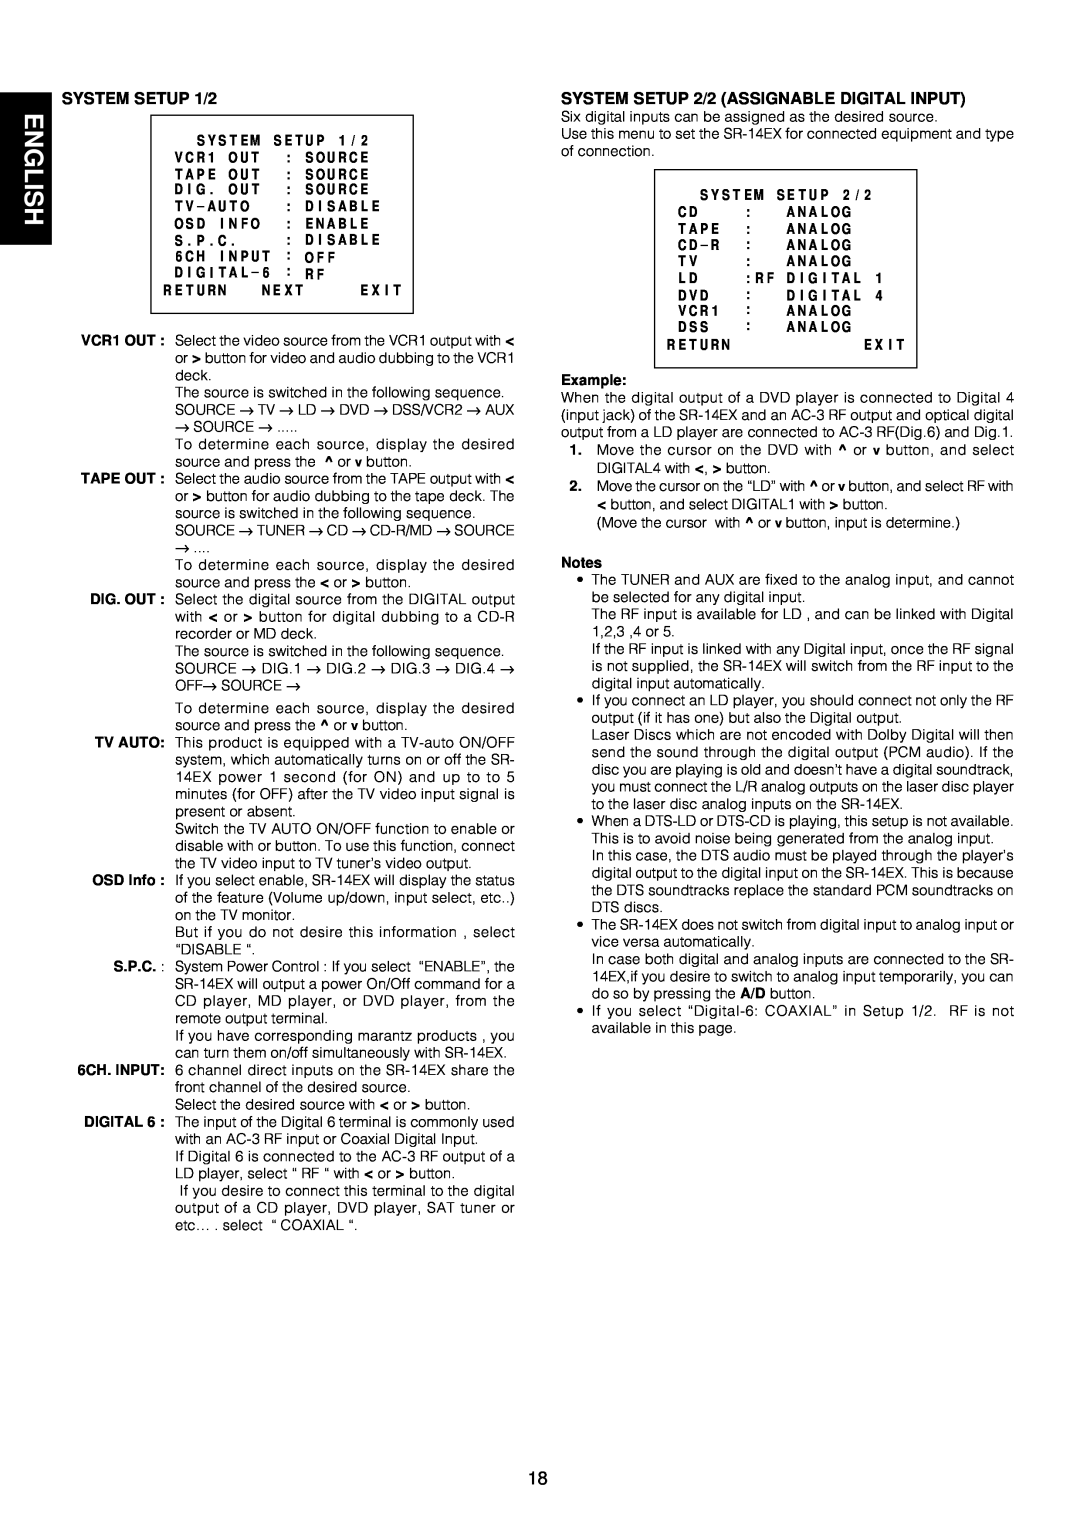 Marantz SR-14EX manual SYSTEM SETUP 1/2, SYSTEM SETUP 2/2 ASSIGNABLE DIGITAL INPUT 